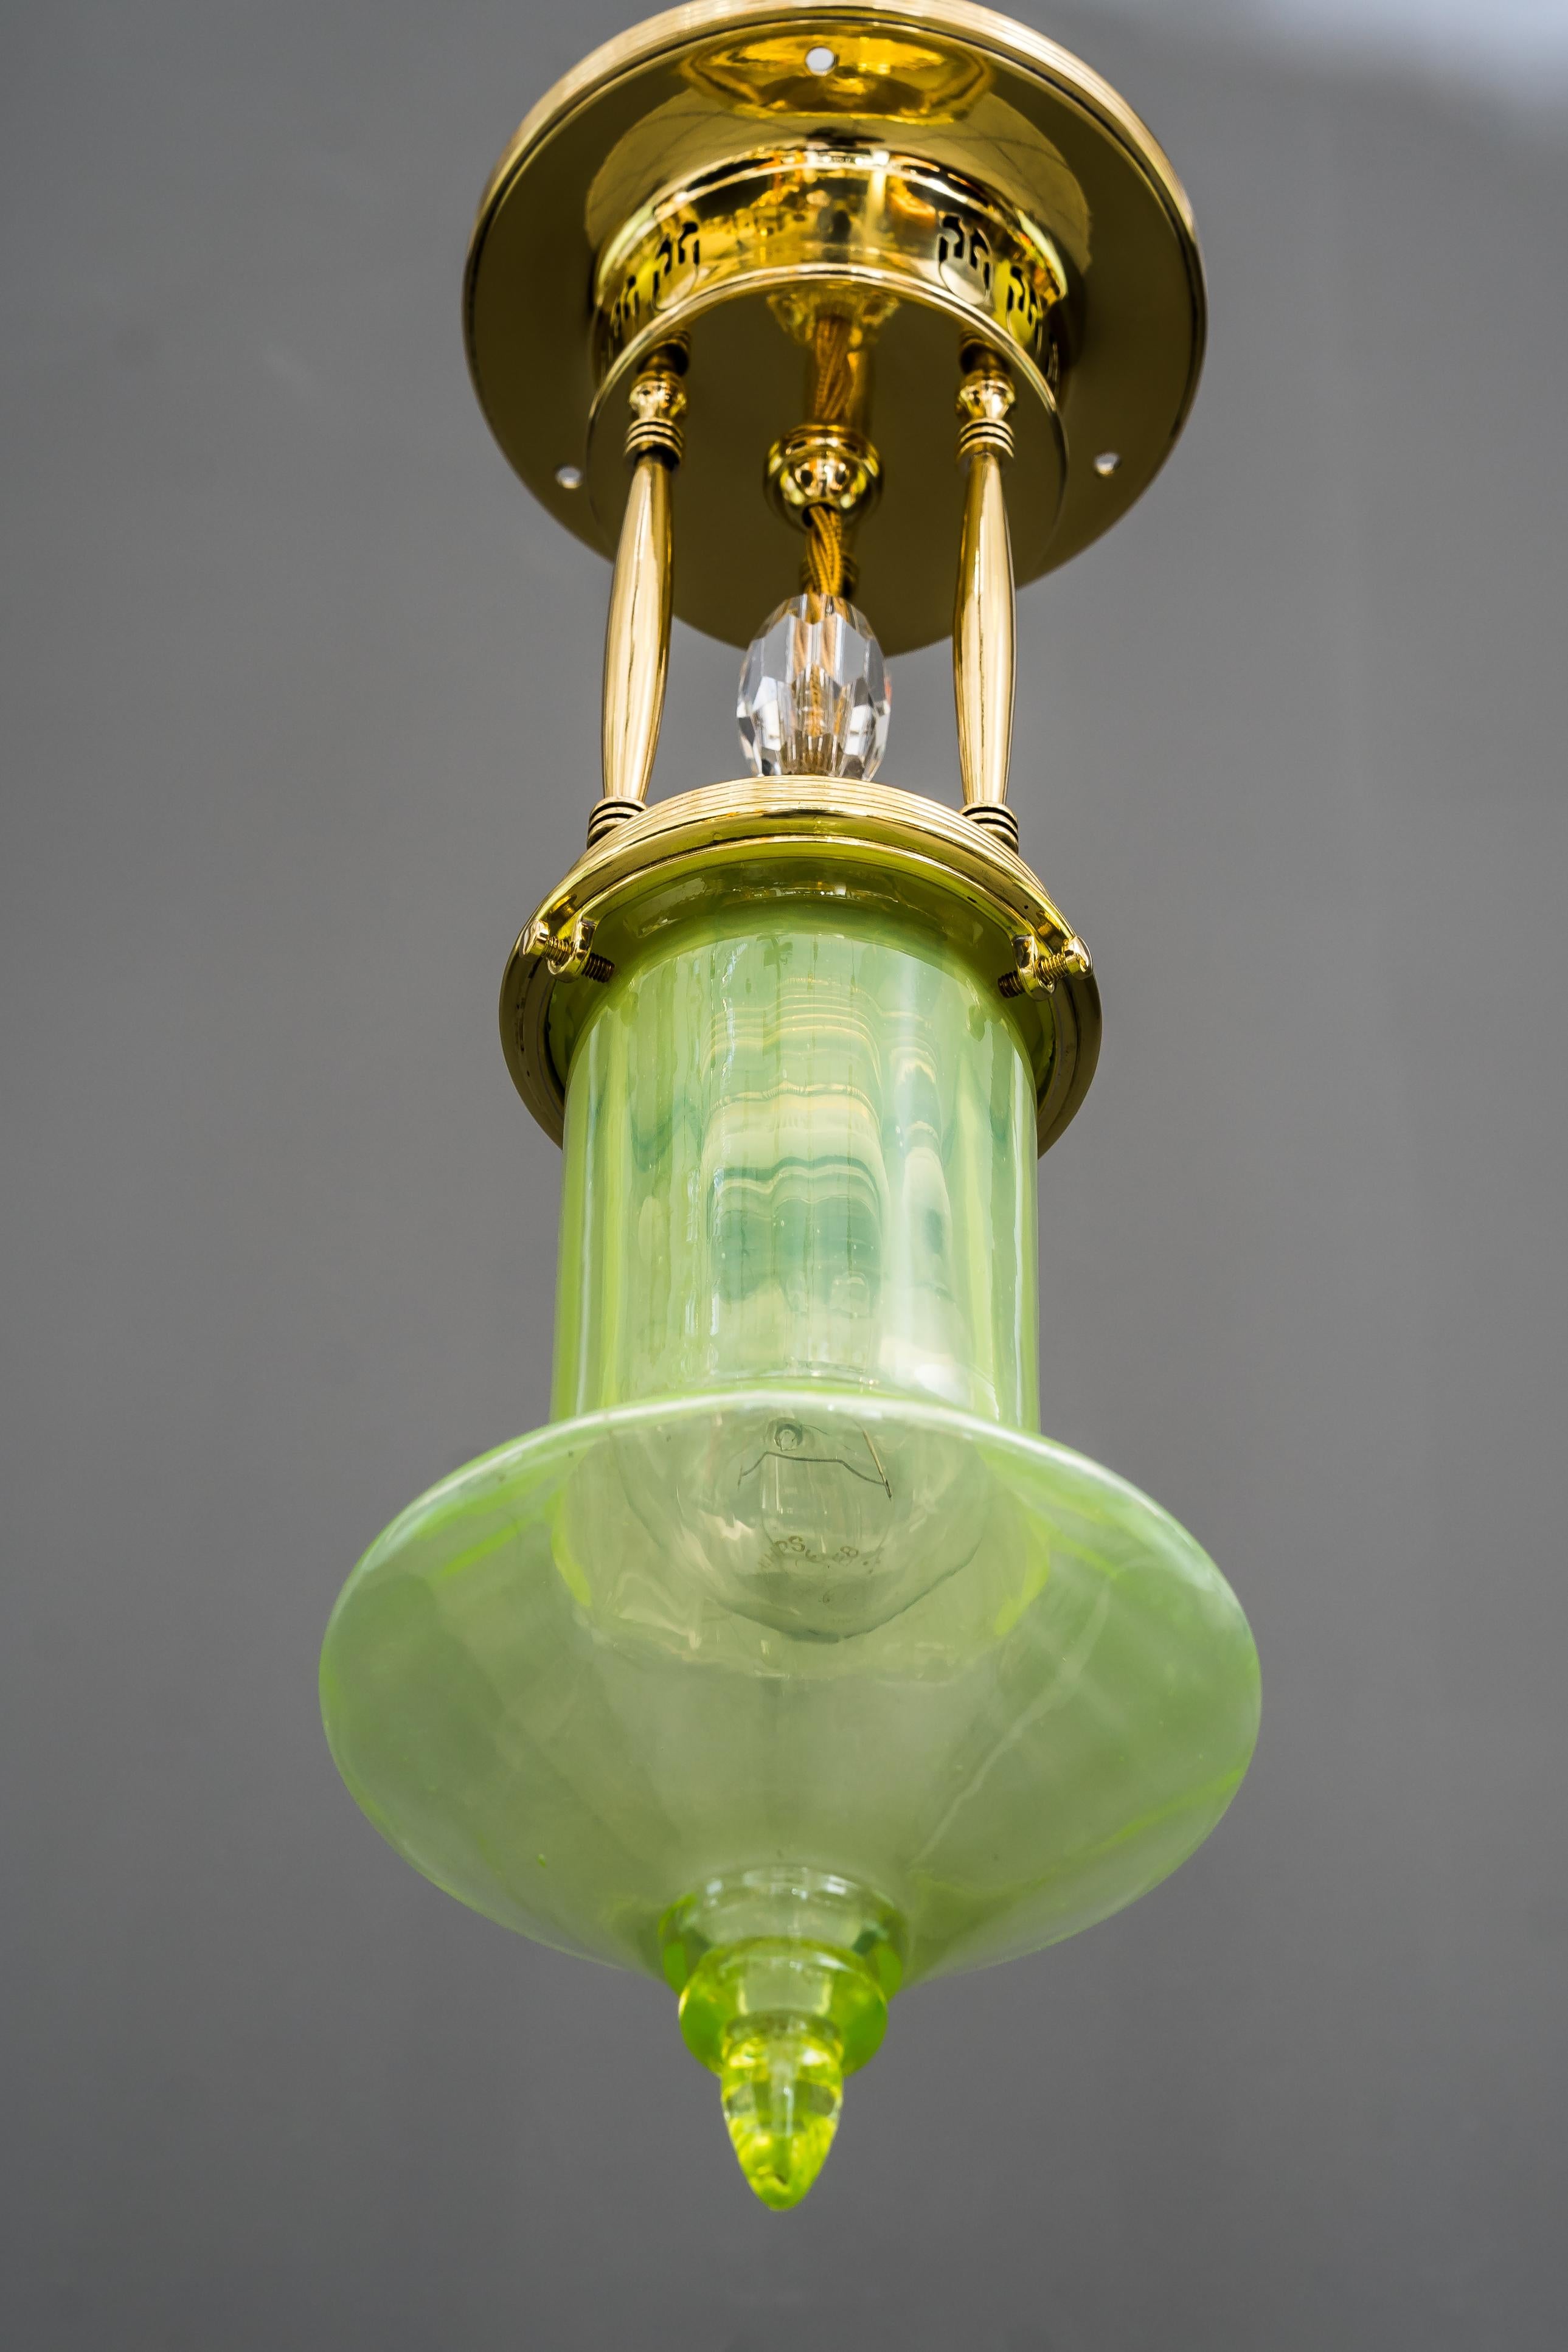 Brass Art Deco Ceiling Lamp Around 1920s with Original Opaline Glass Shade